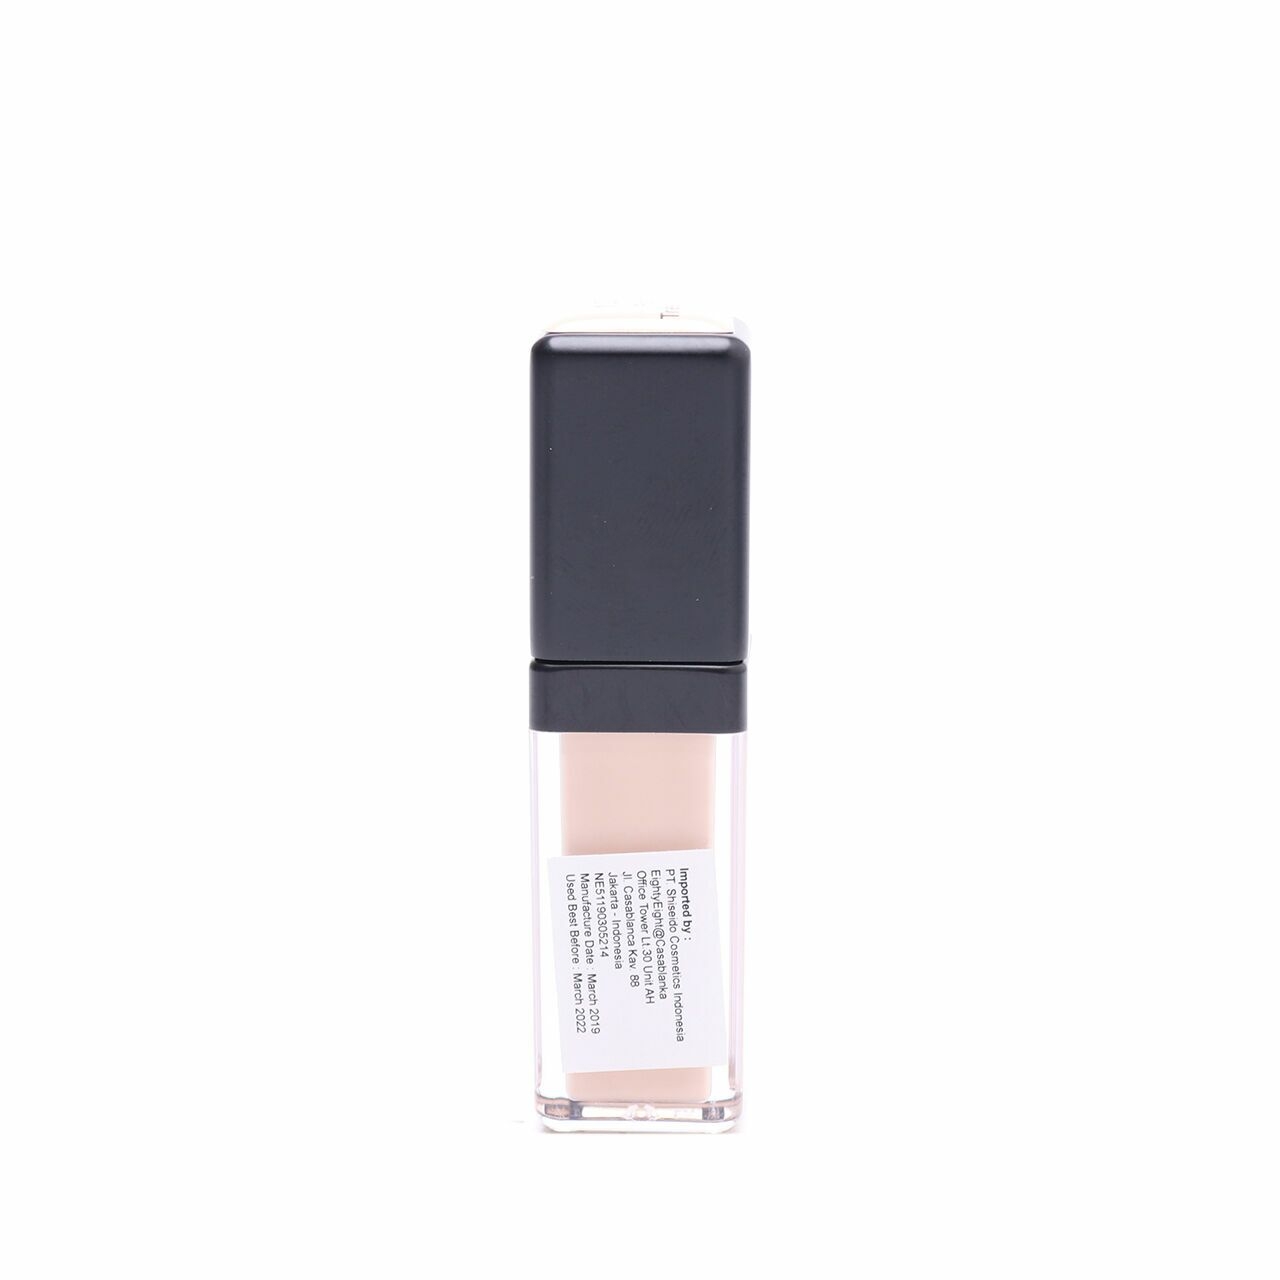 Shiseido 102 Synchro Skin Self Refreshing Concealer Faces